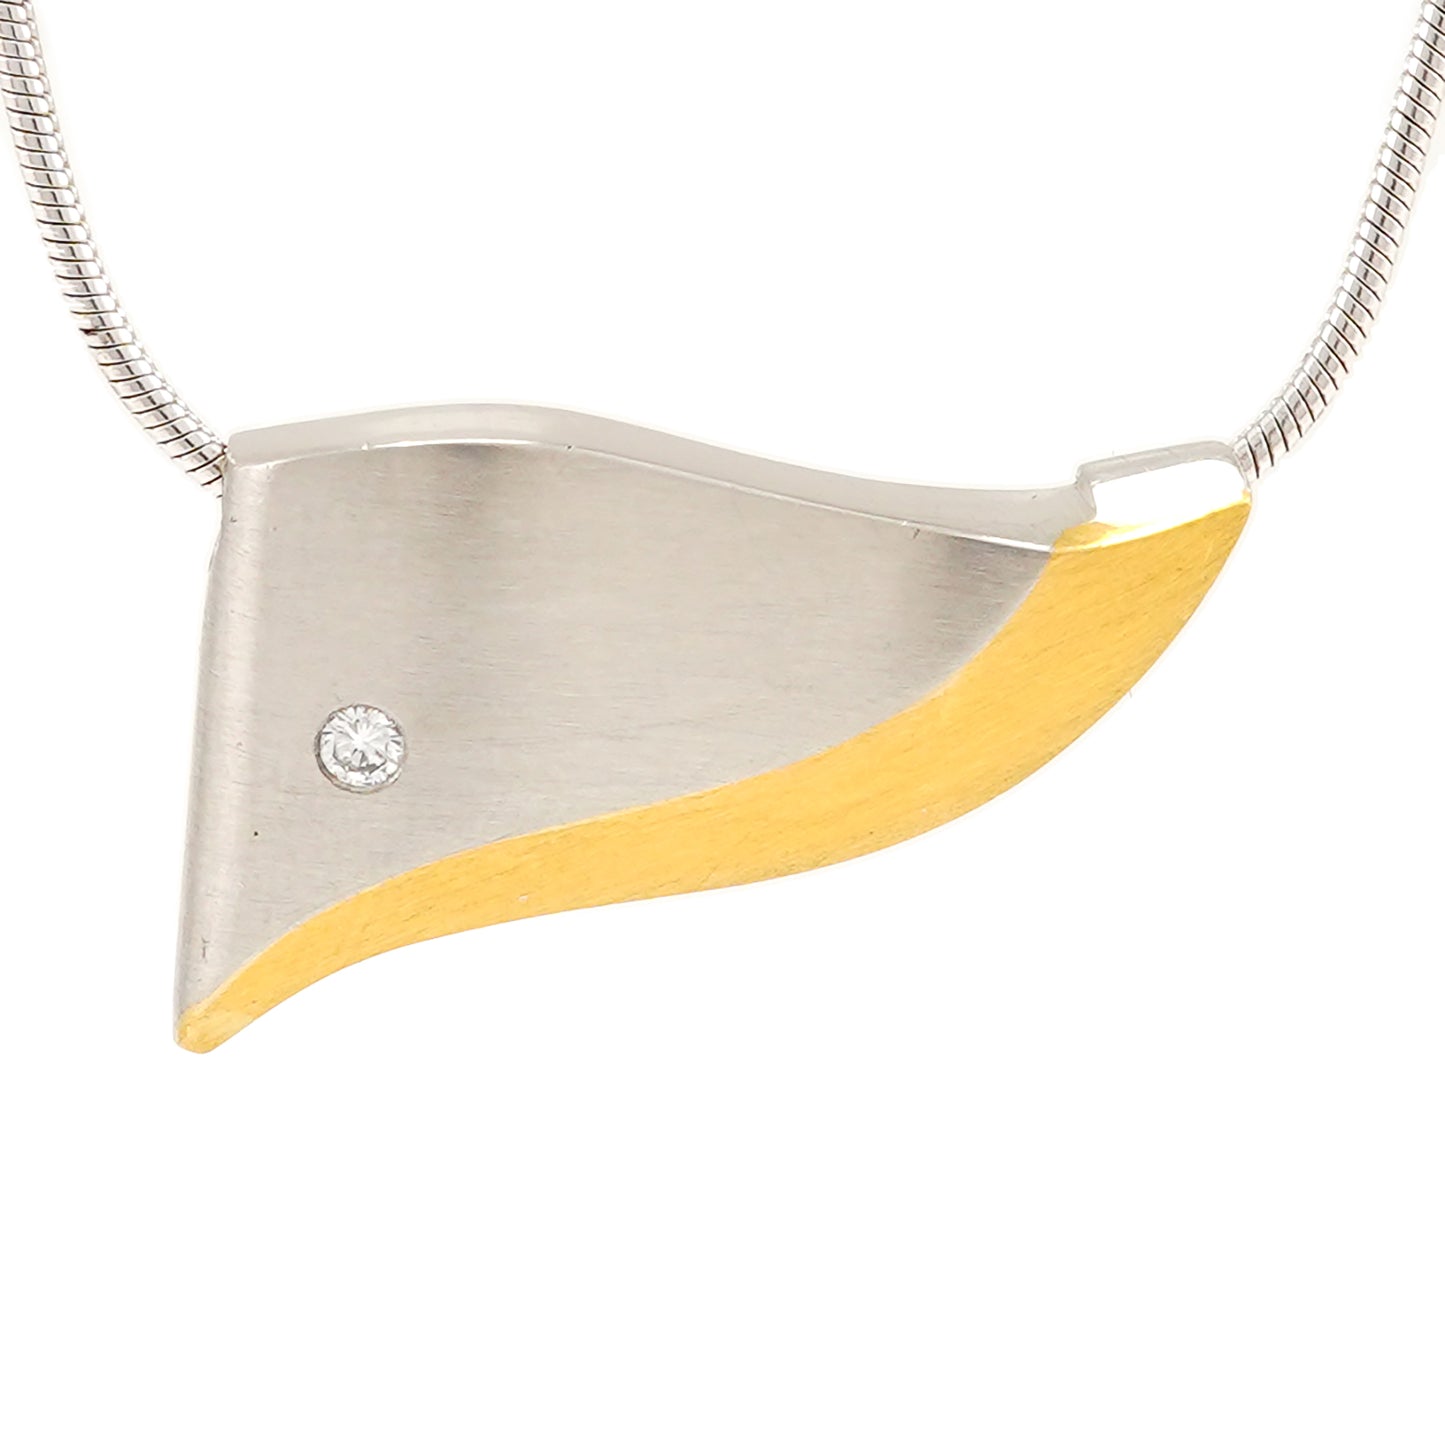 Diamond pendant 950 platinum yellow gold 750 women's jewelry chain pendant chain 925